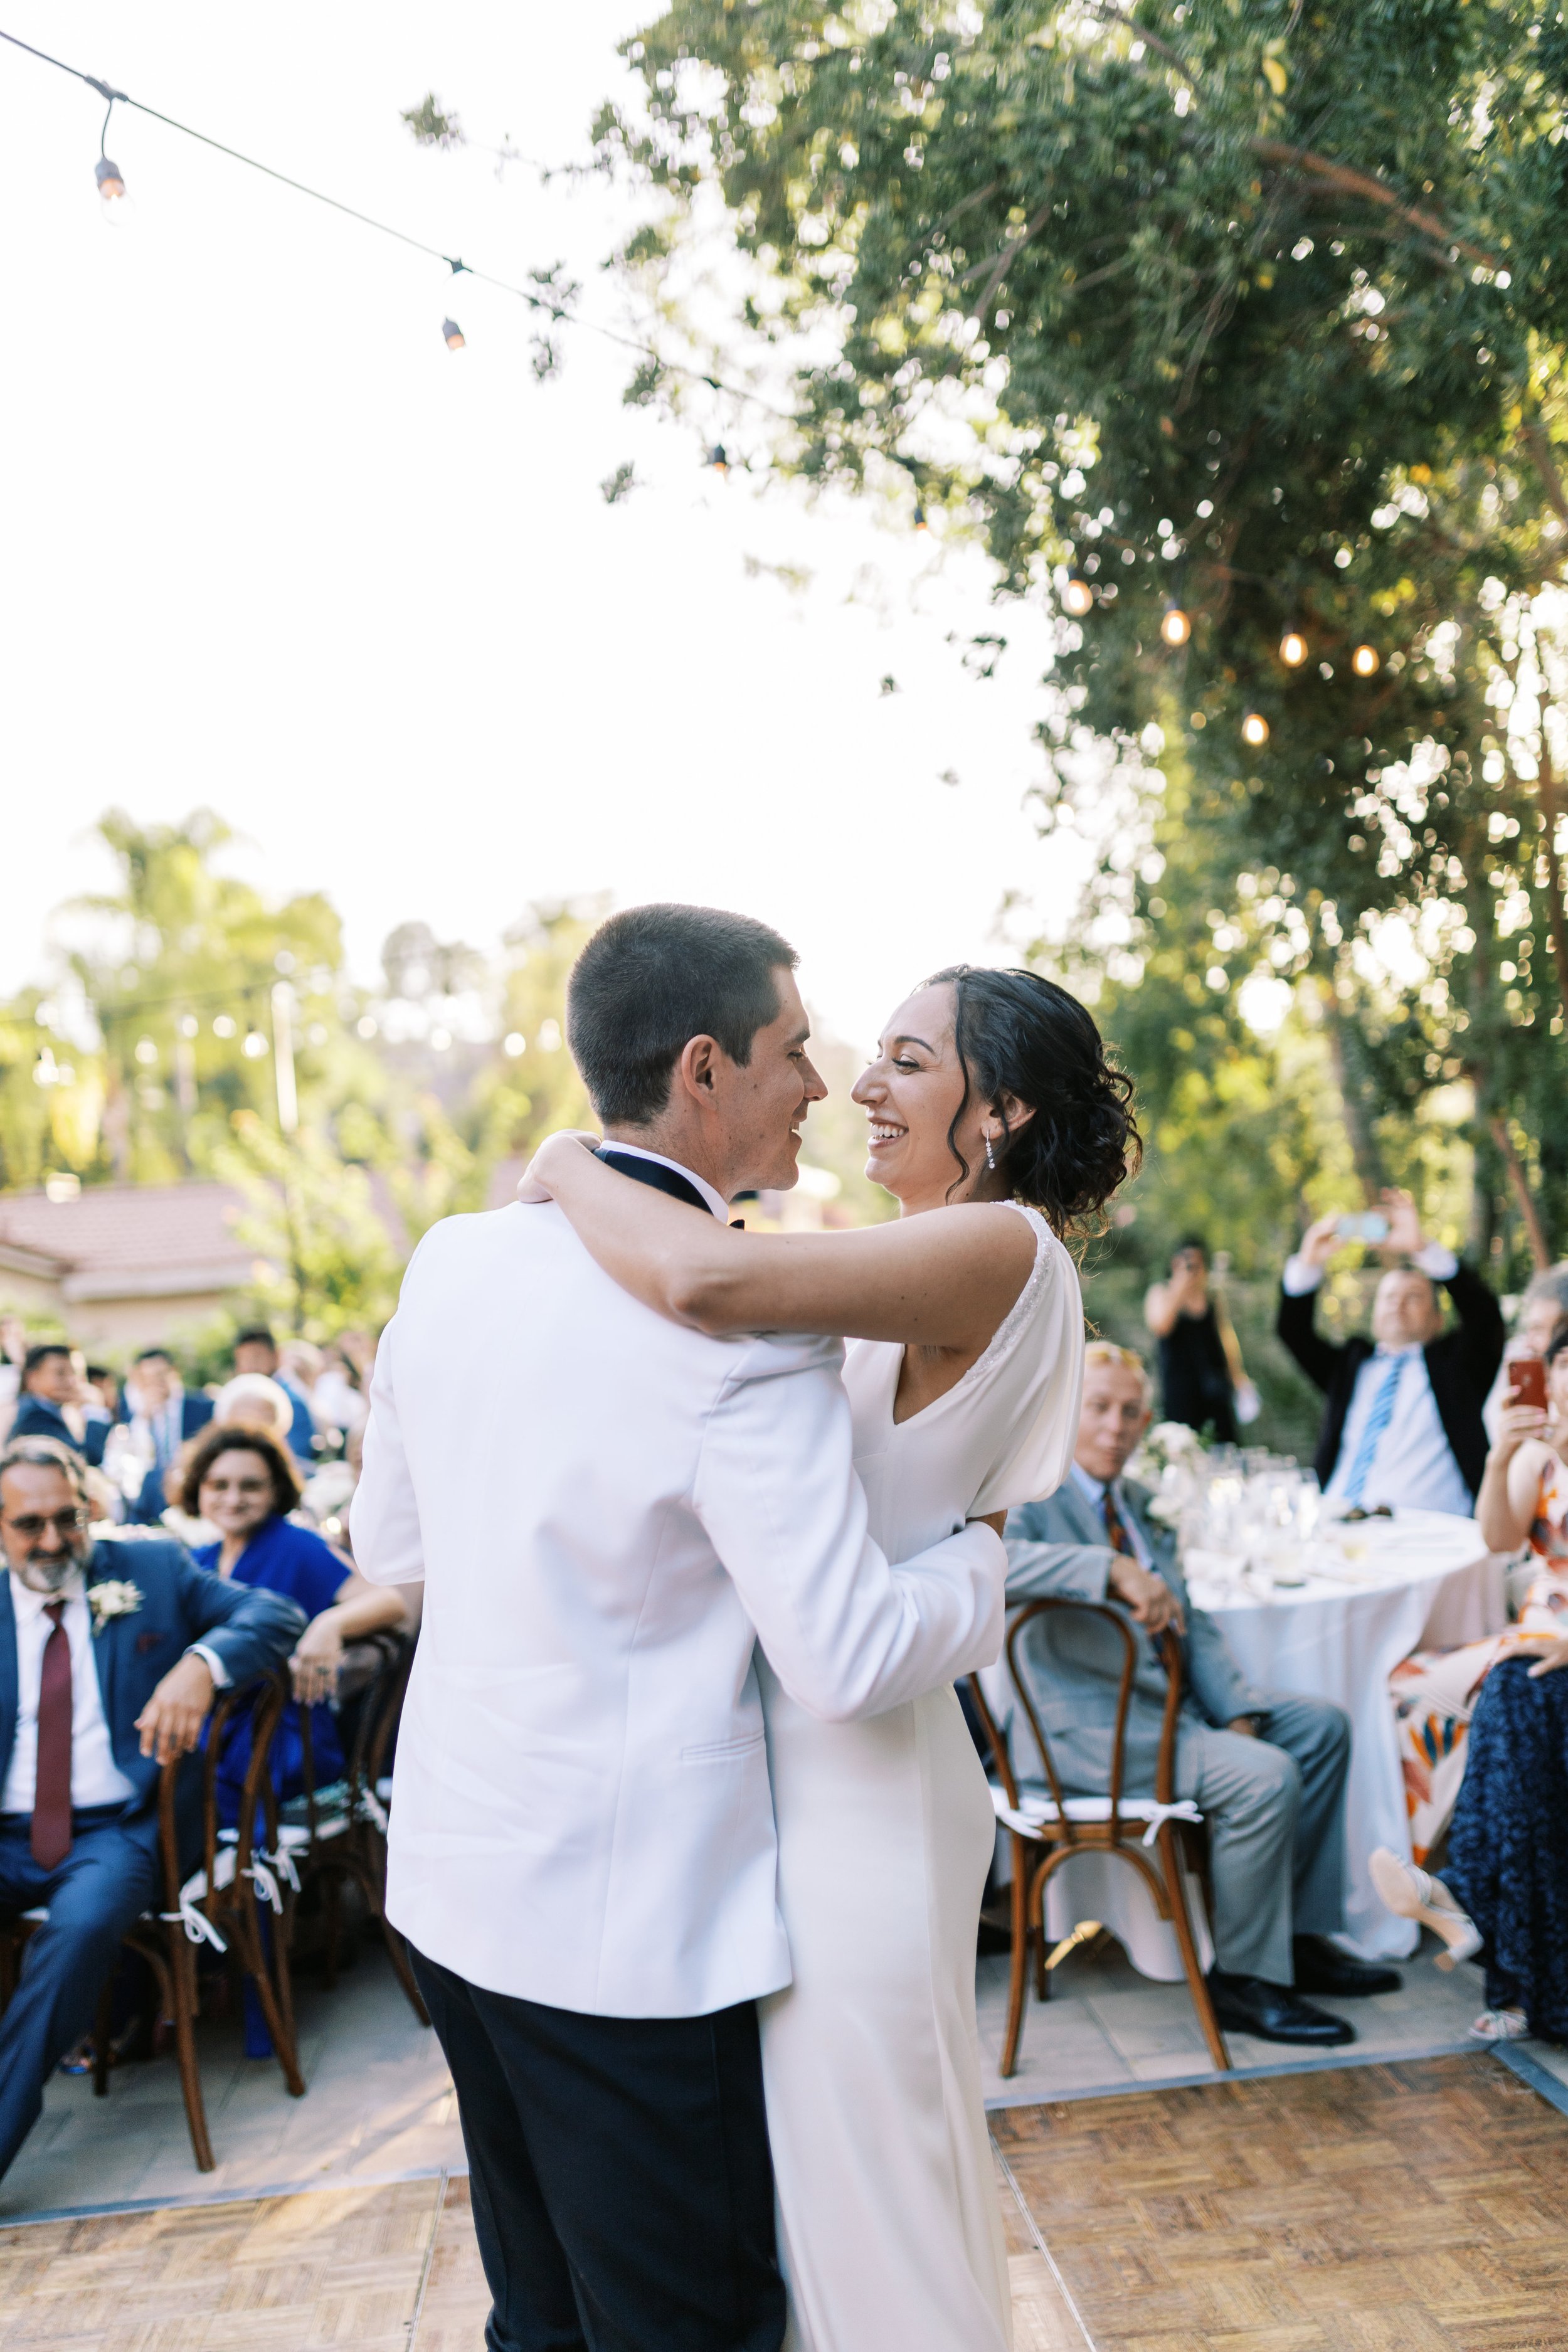 Backyard Los Angeles wedding first dance on a portable wooden dancefloor.